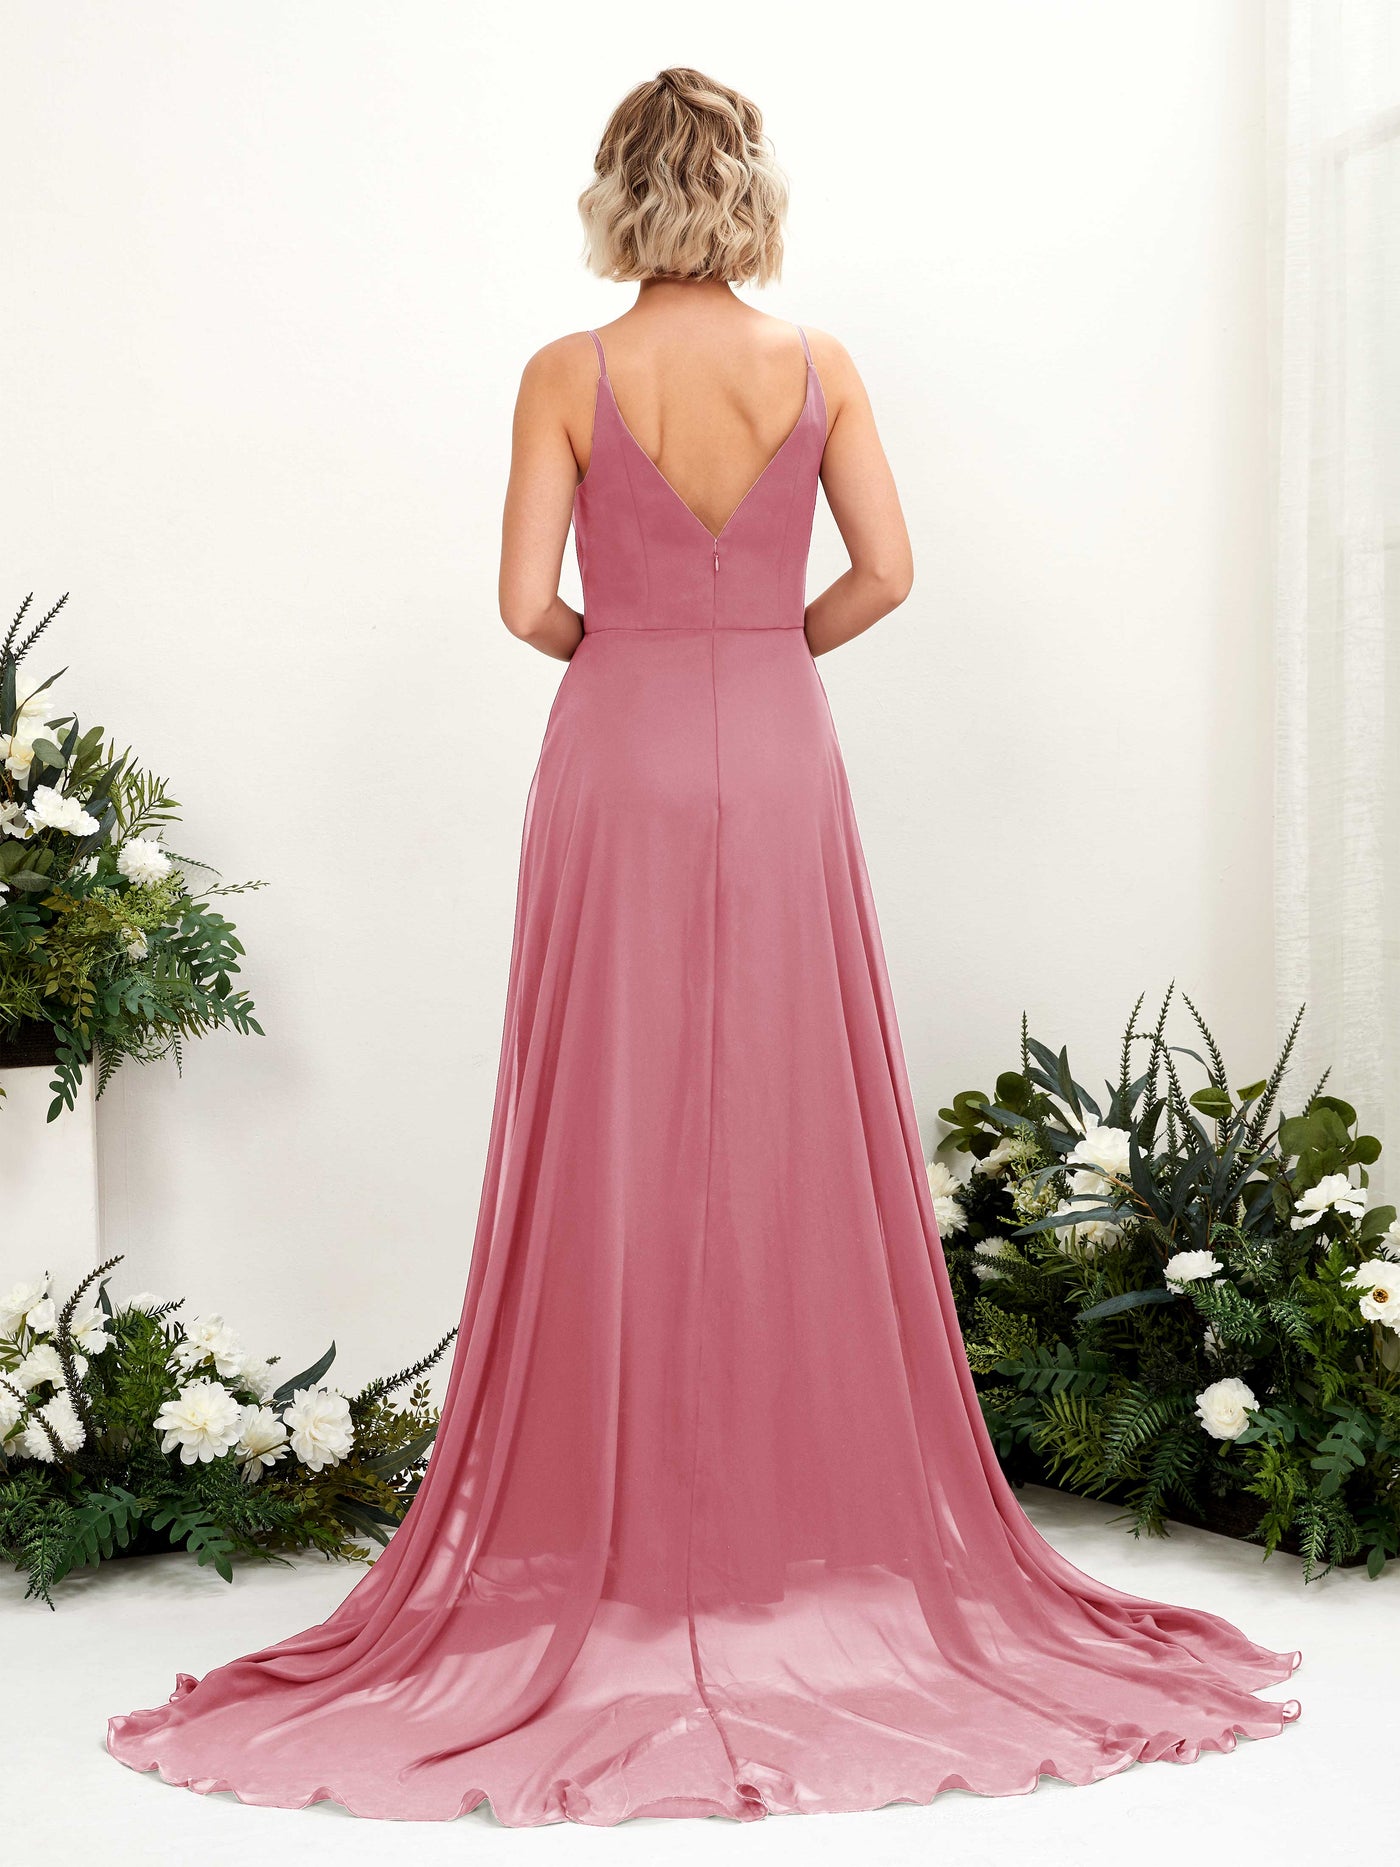 Desert Rose Bridesmaid Dresses Bridesmaid Dress A-line Chiffon V-neck Full Length Sleeveless Wedding Party Dress (81224111)#color_desert-rose